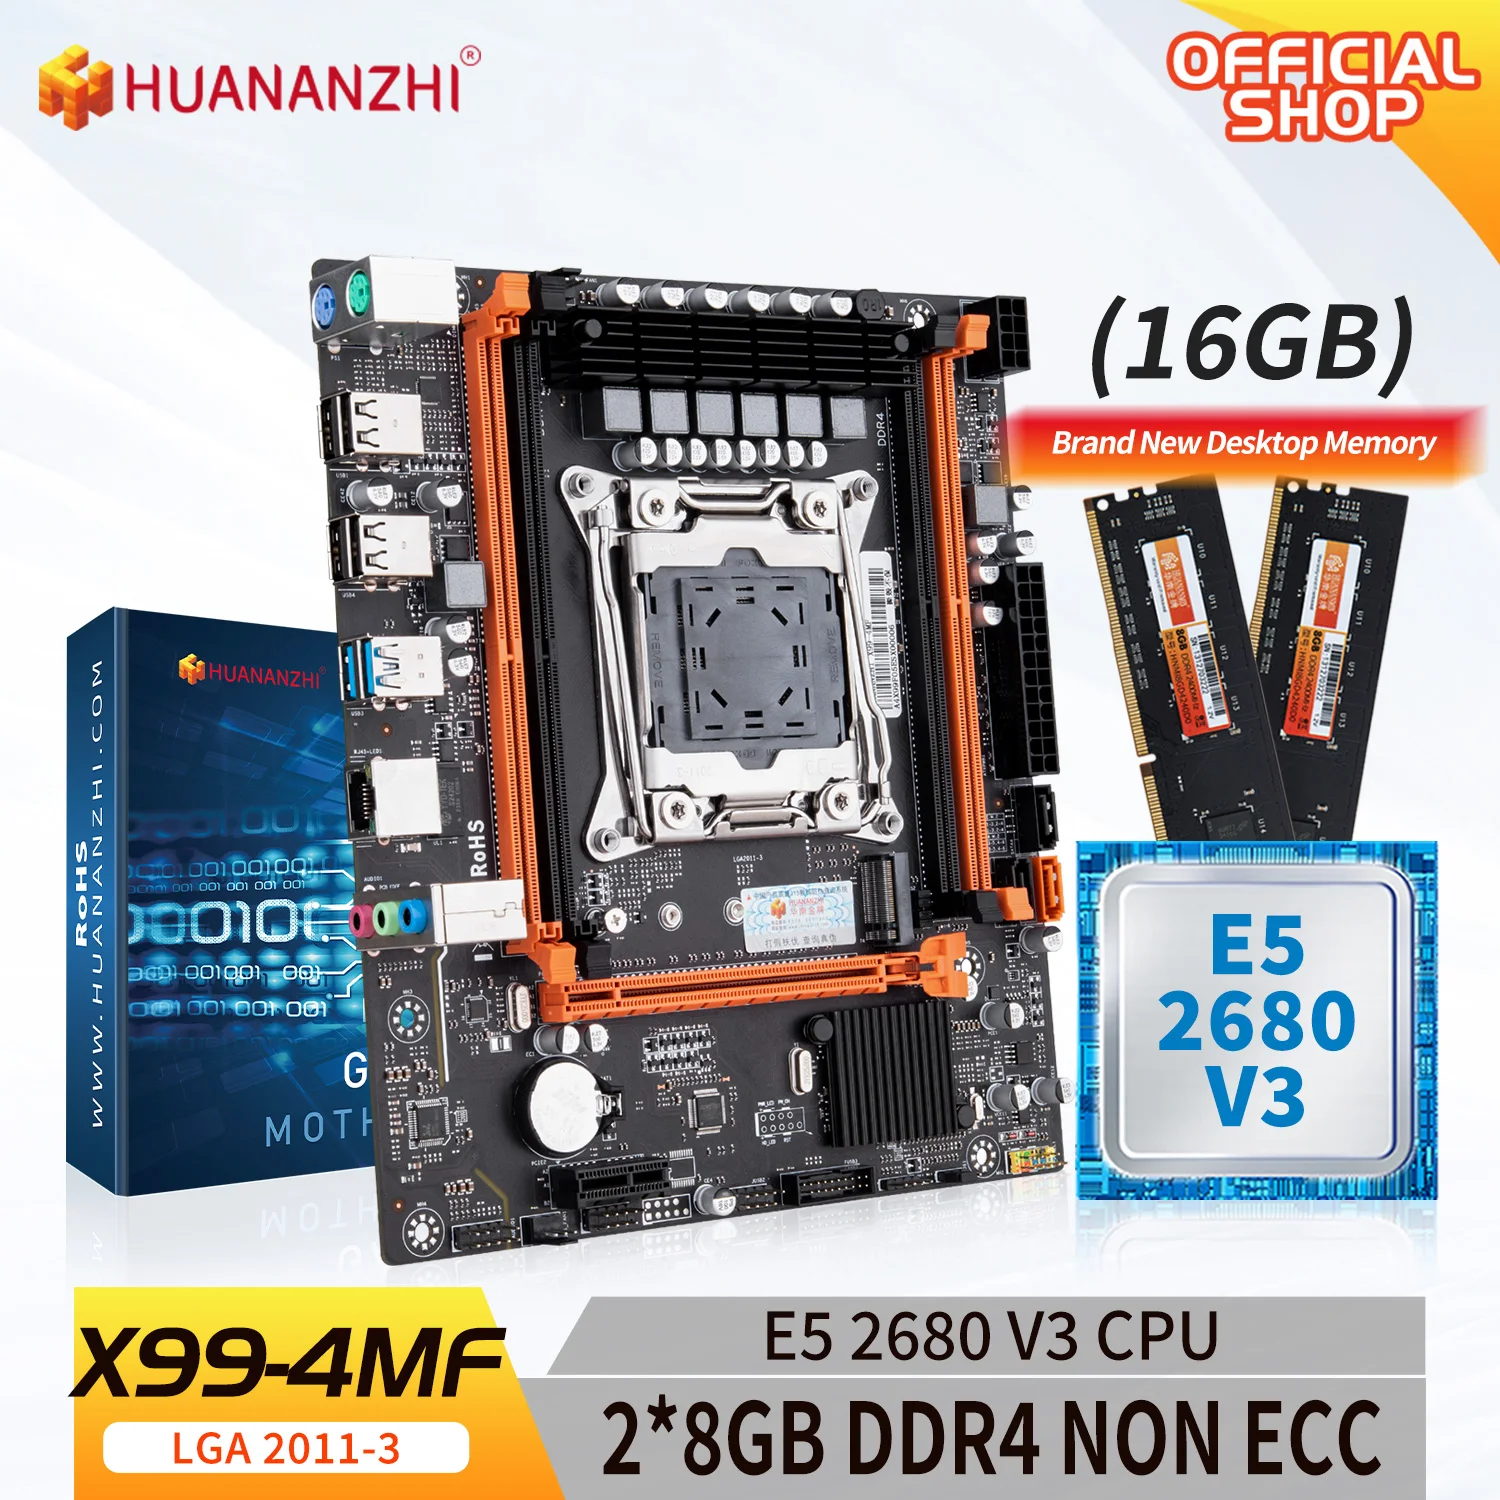 

HUANANZHI X99 4MF LGA 2011-3 XEON X99 Motherboard with Intel E5 2680 v3 with 2*8G DDR4 NON-ECC memory combo kit set M.2 NVME